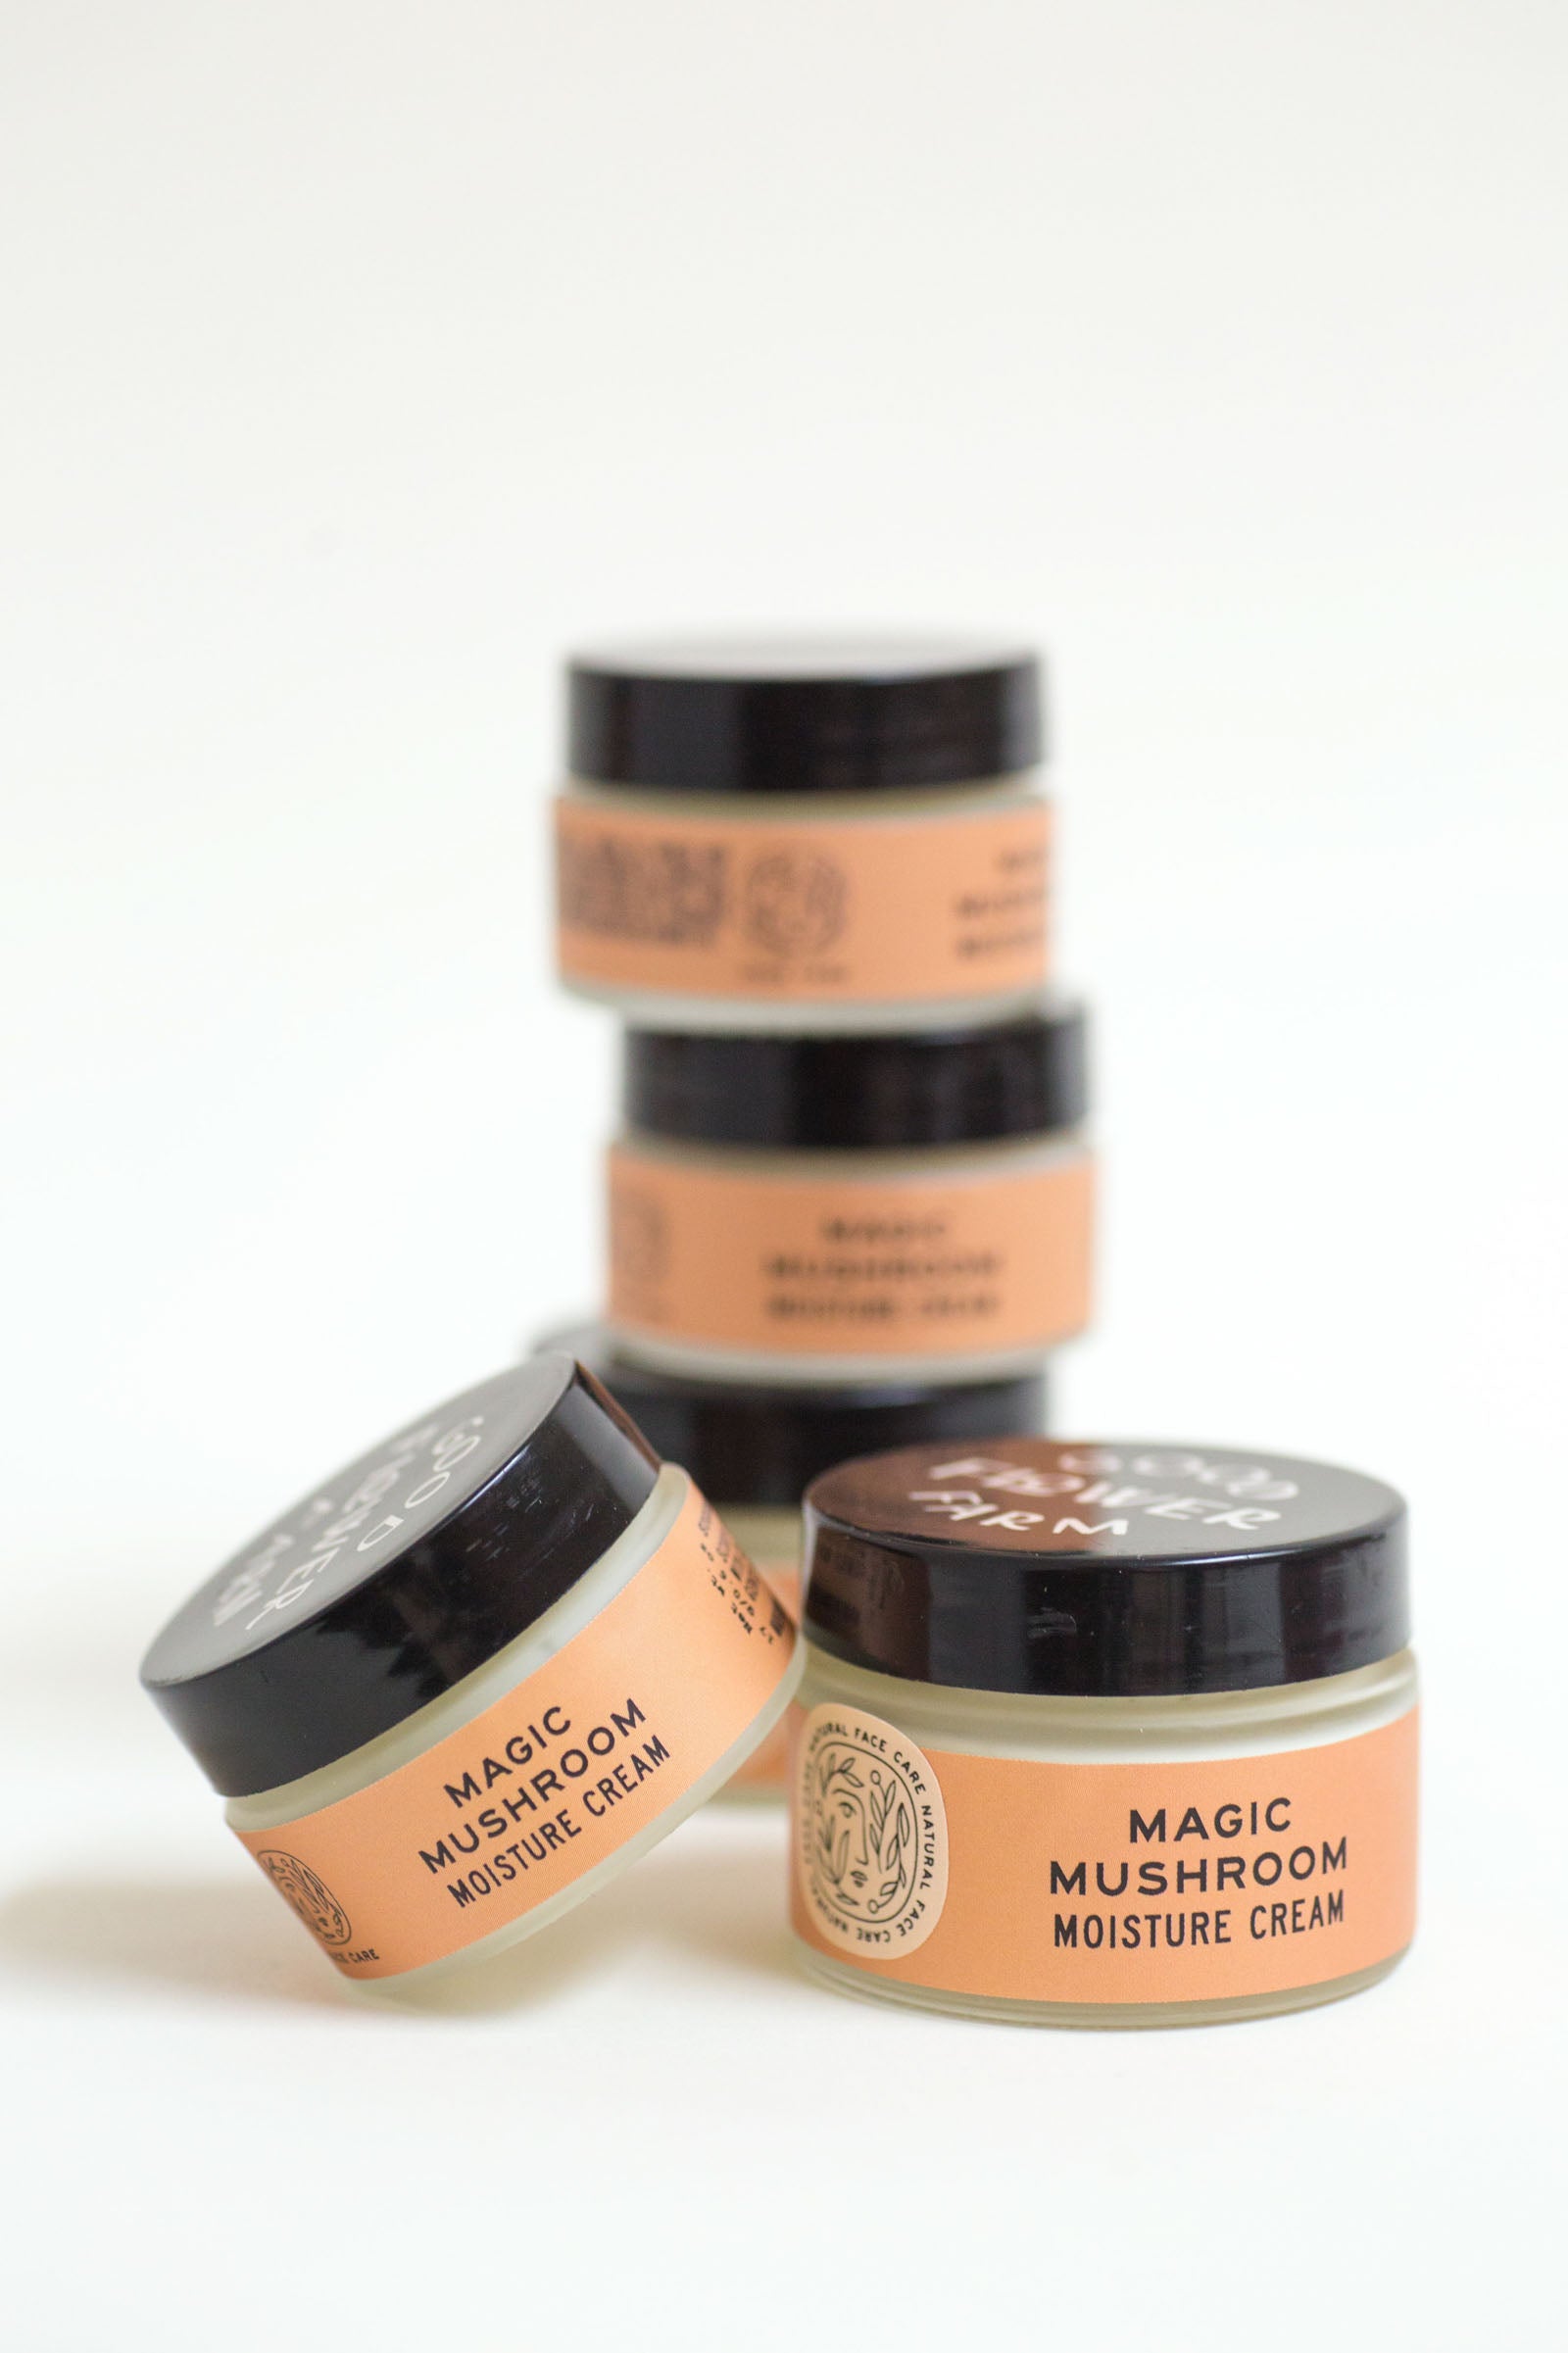 Organic herbal magic mushroom face cream by Good Flower Farm